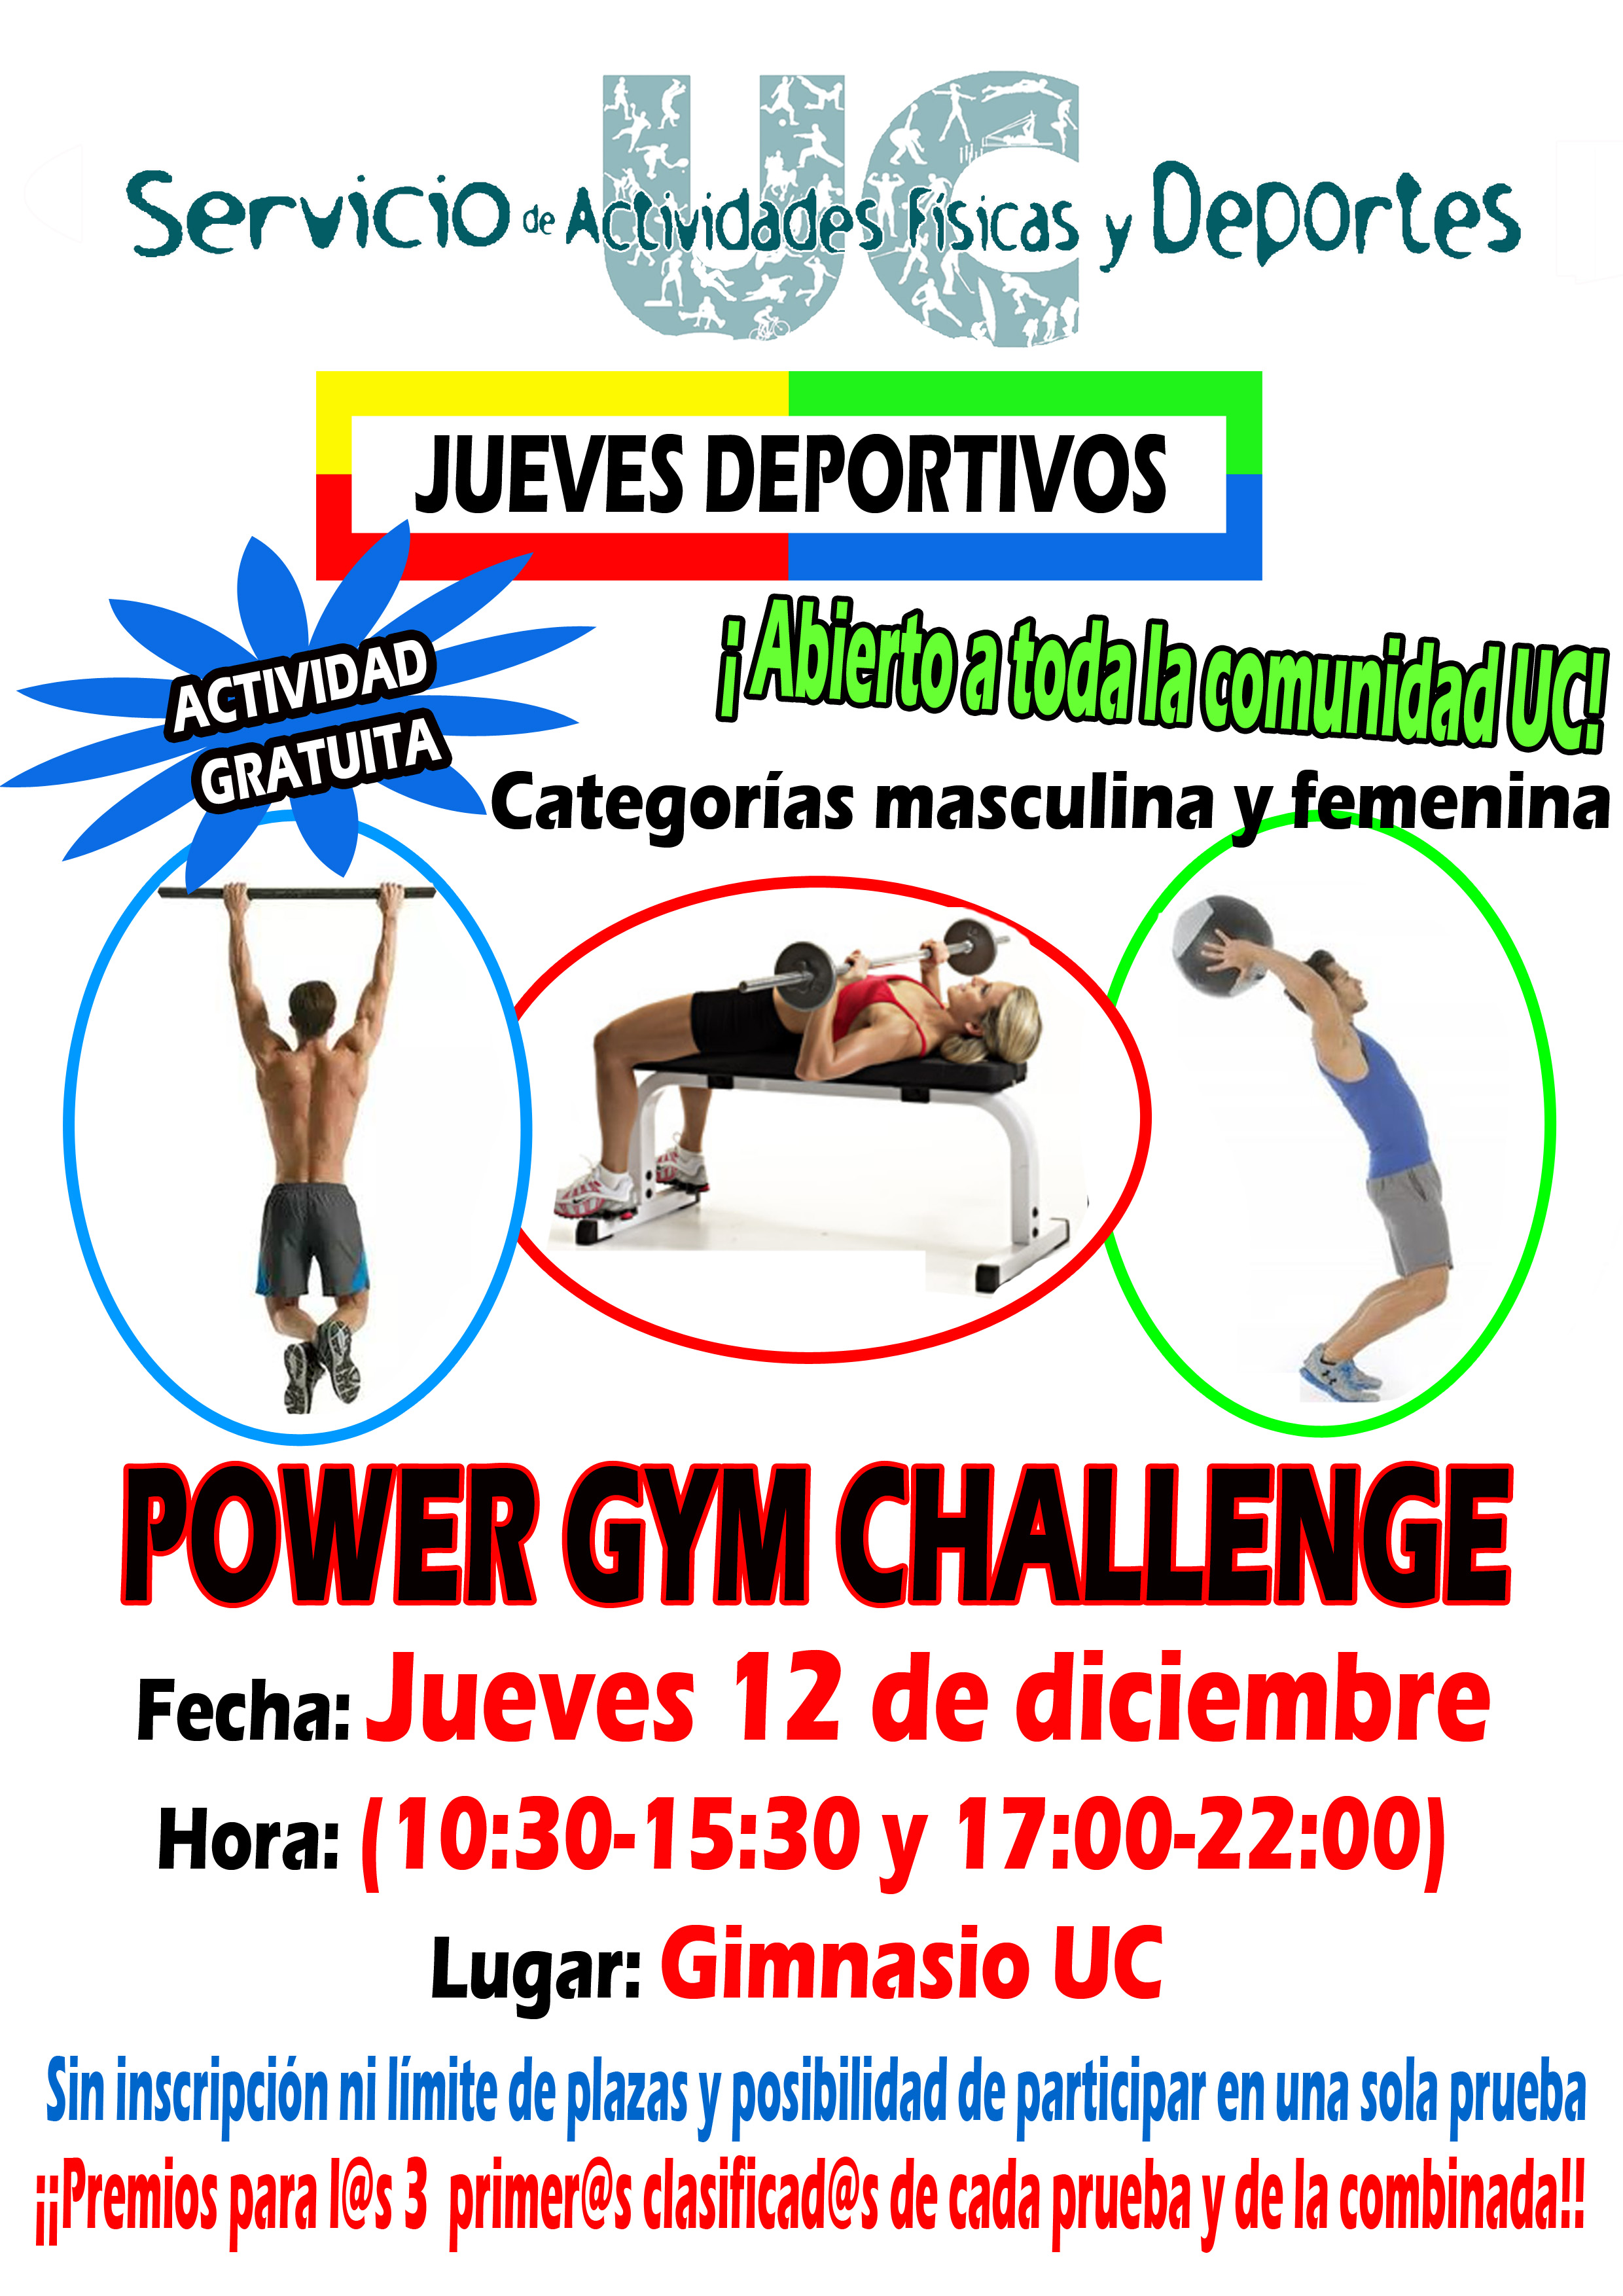 Power gym challenge